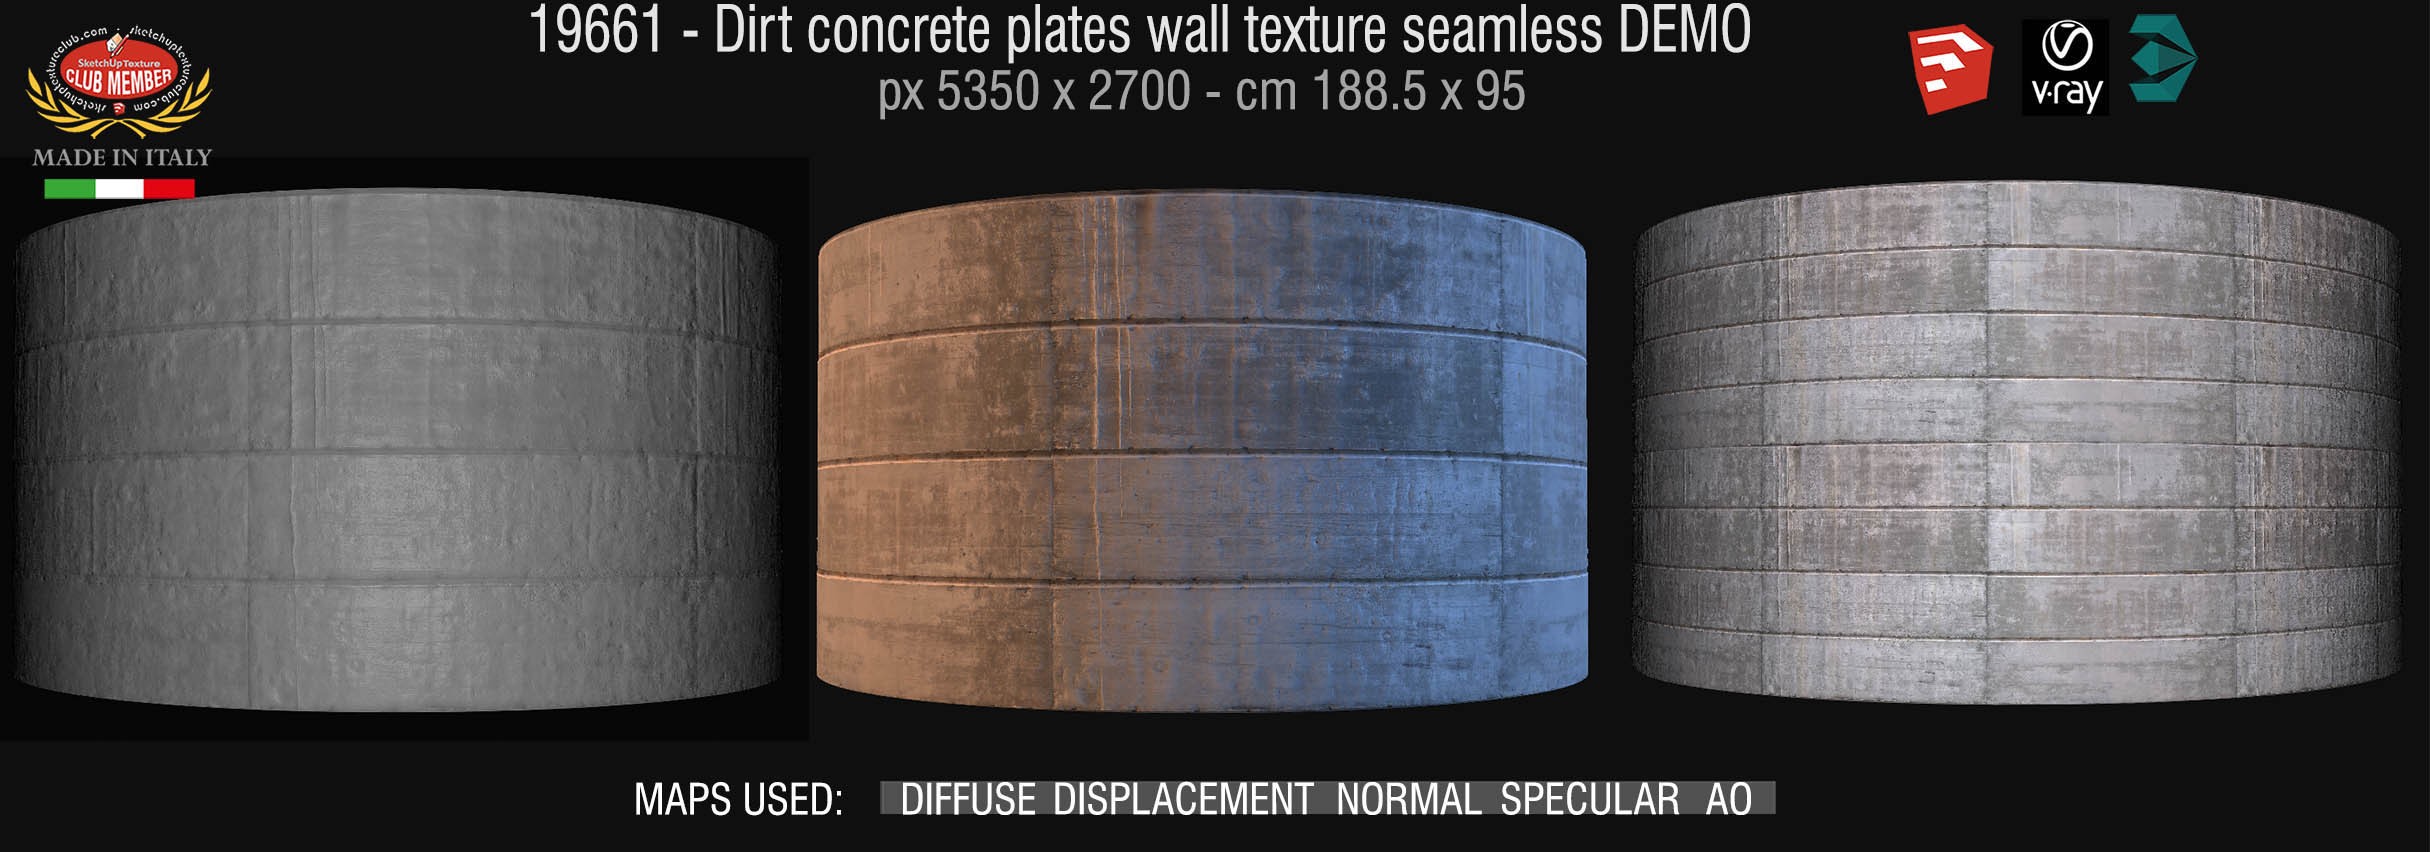 19661 Dirt concrete plates wall texture seamless + maps DEMO